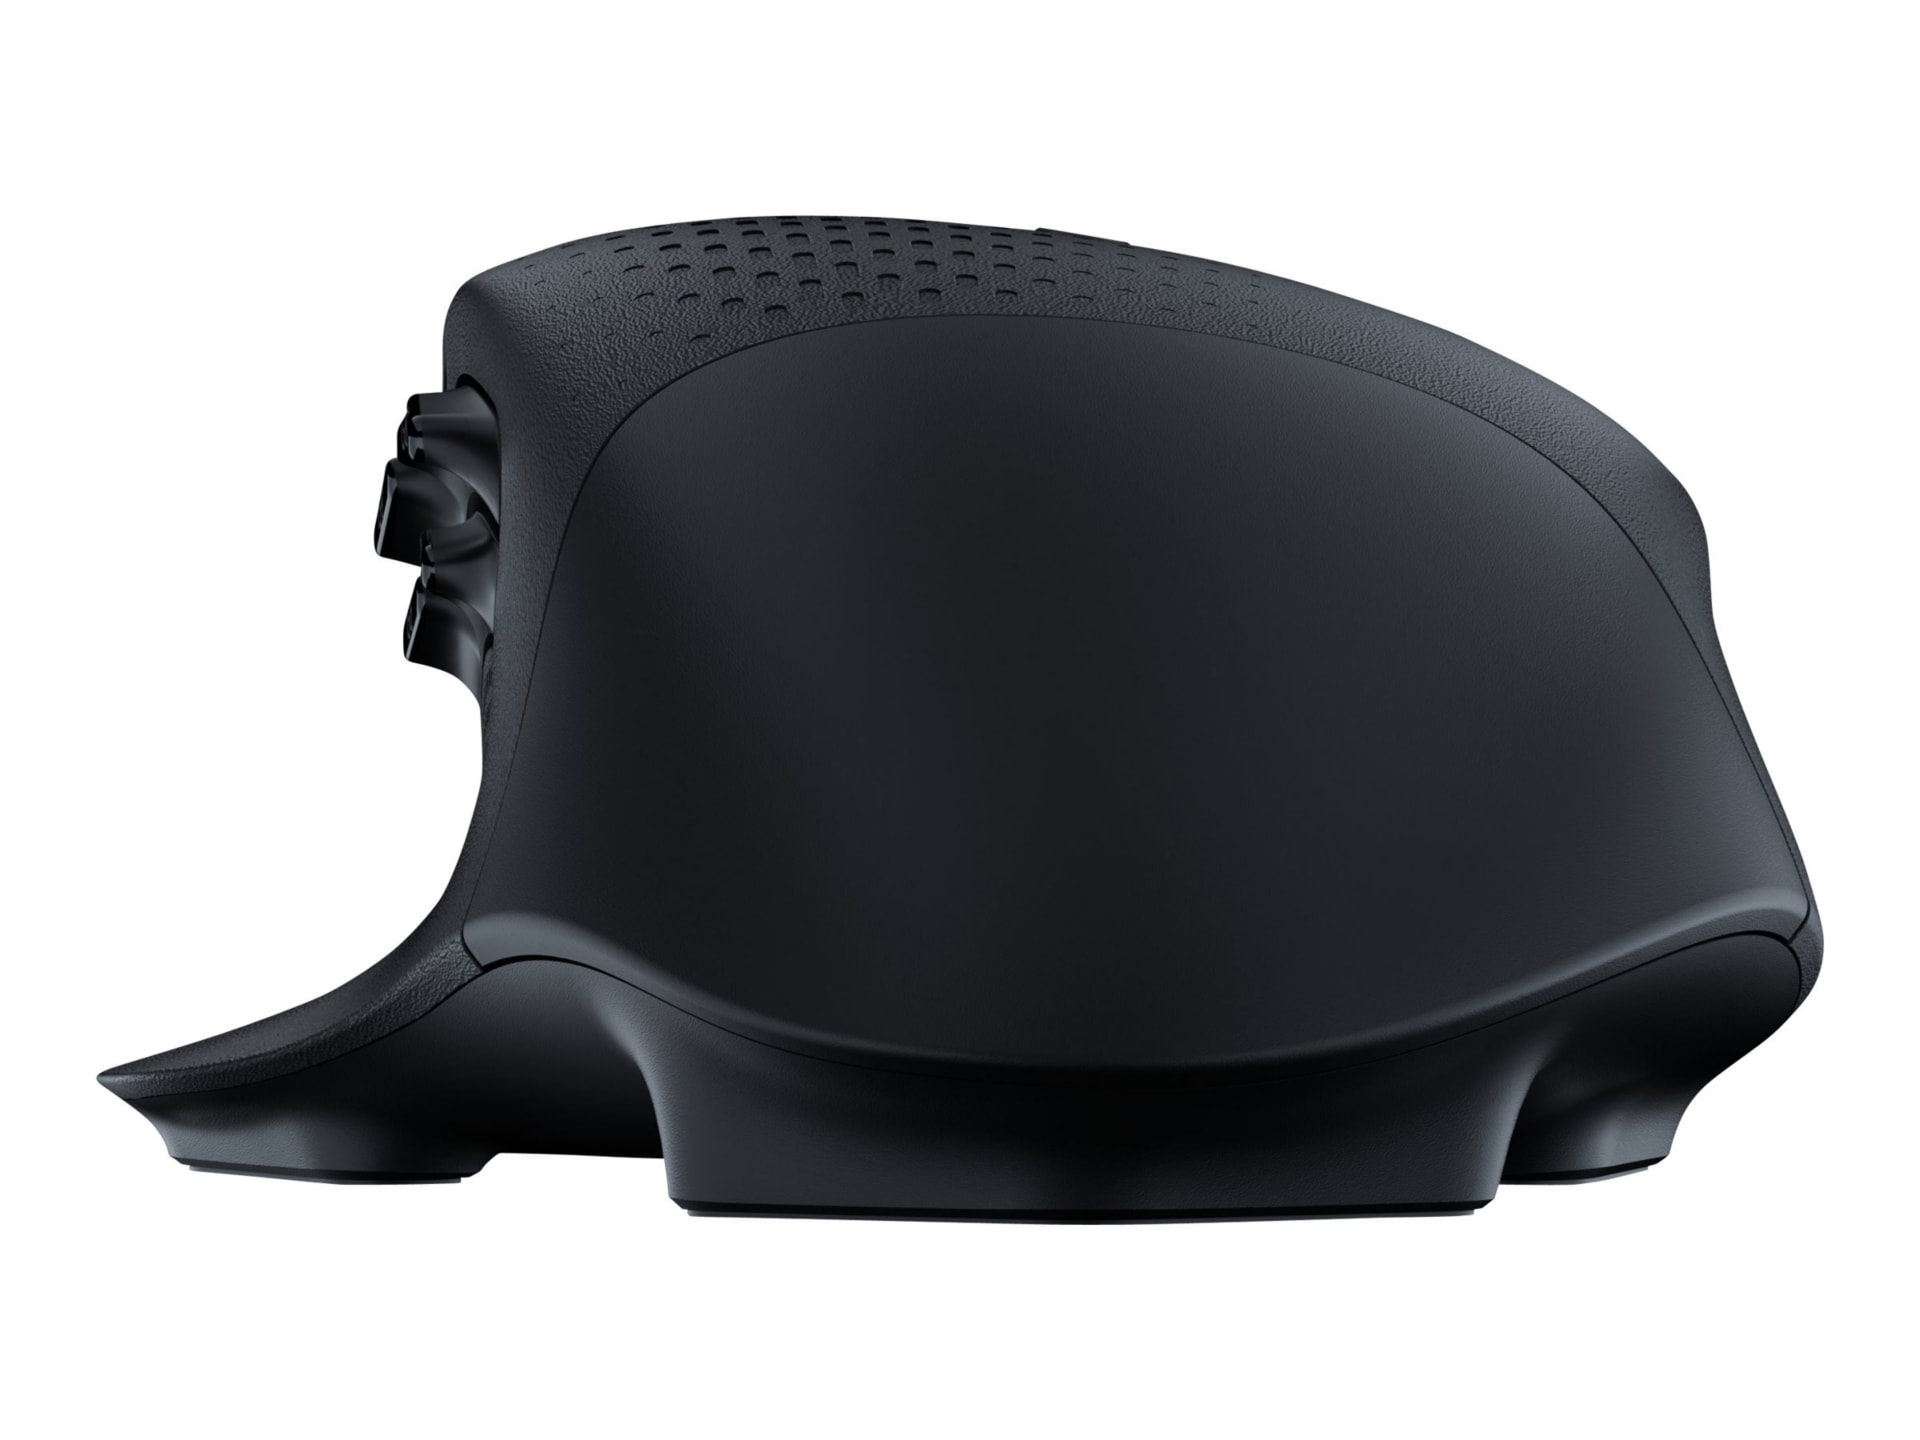 Logitech G604 LIGHTSPEED Wireless Gaming Mouse - mouse - Bluetooth, LIGHTSPEED